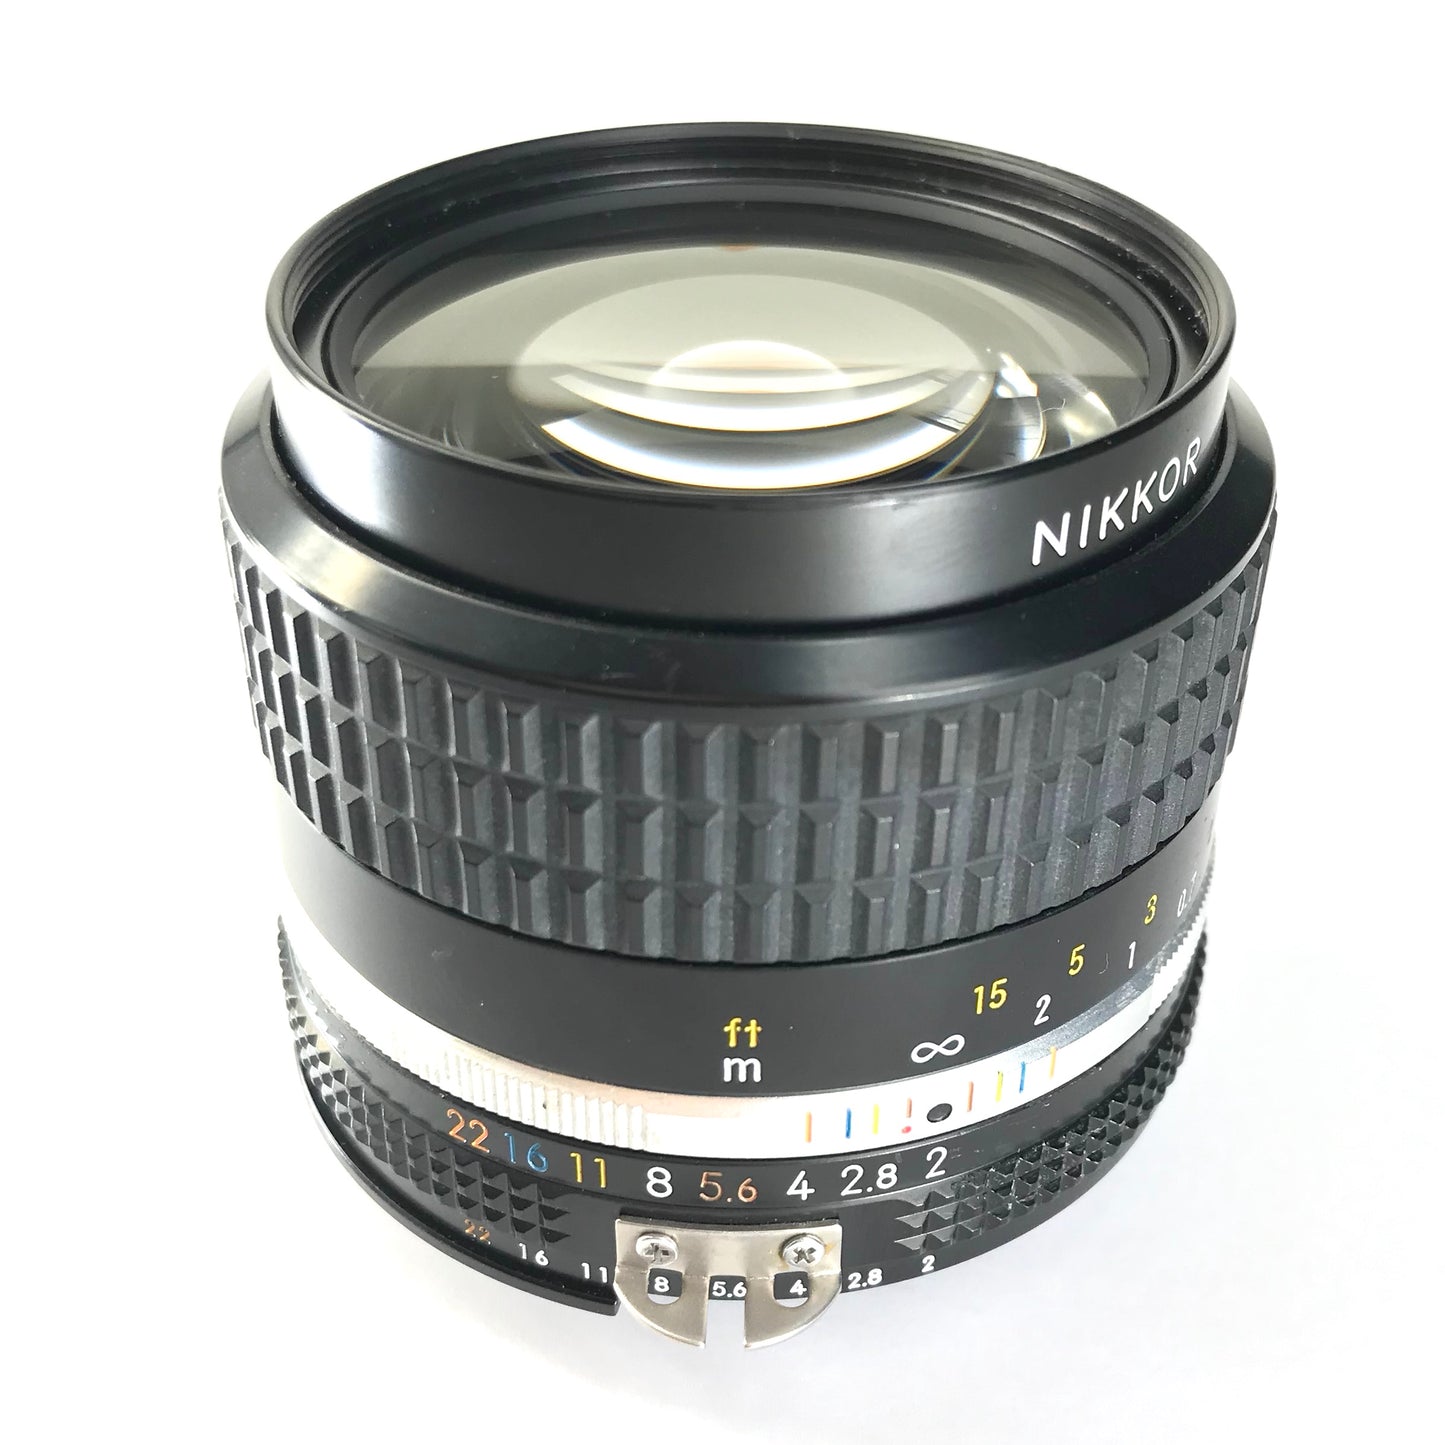 Nikon 35mm f2 AIS